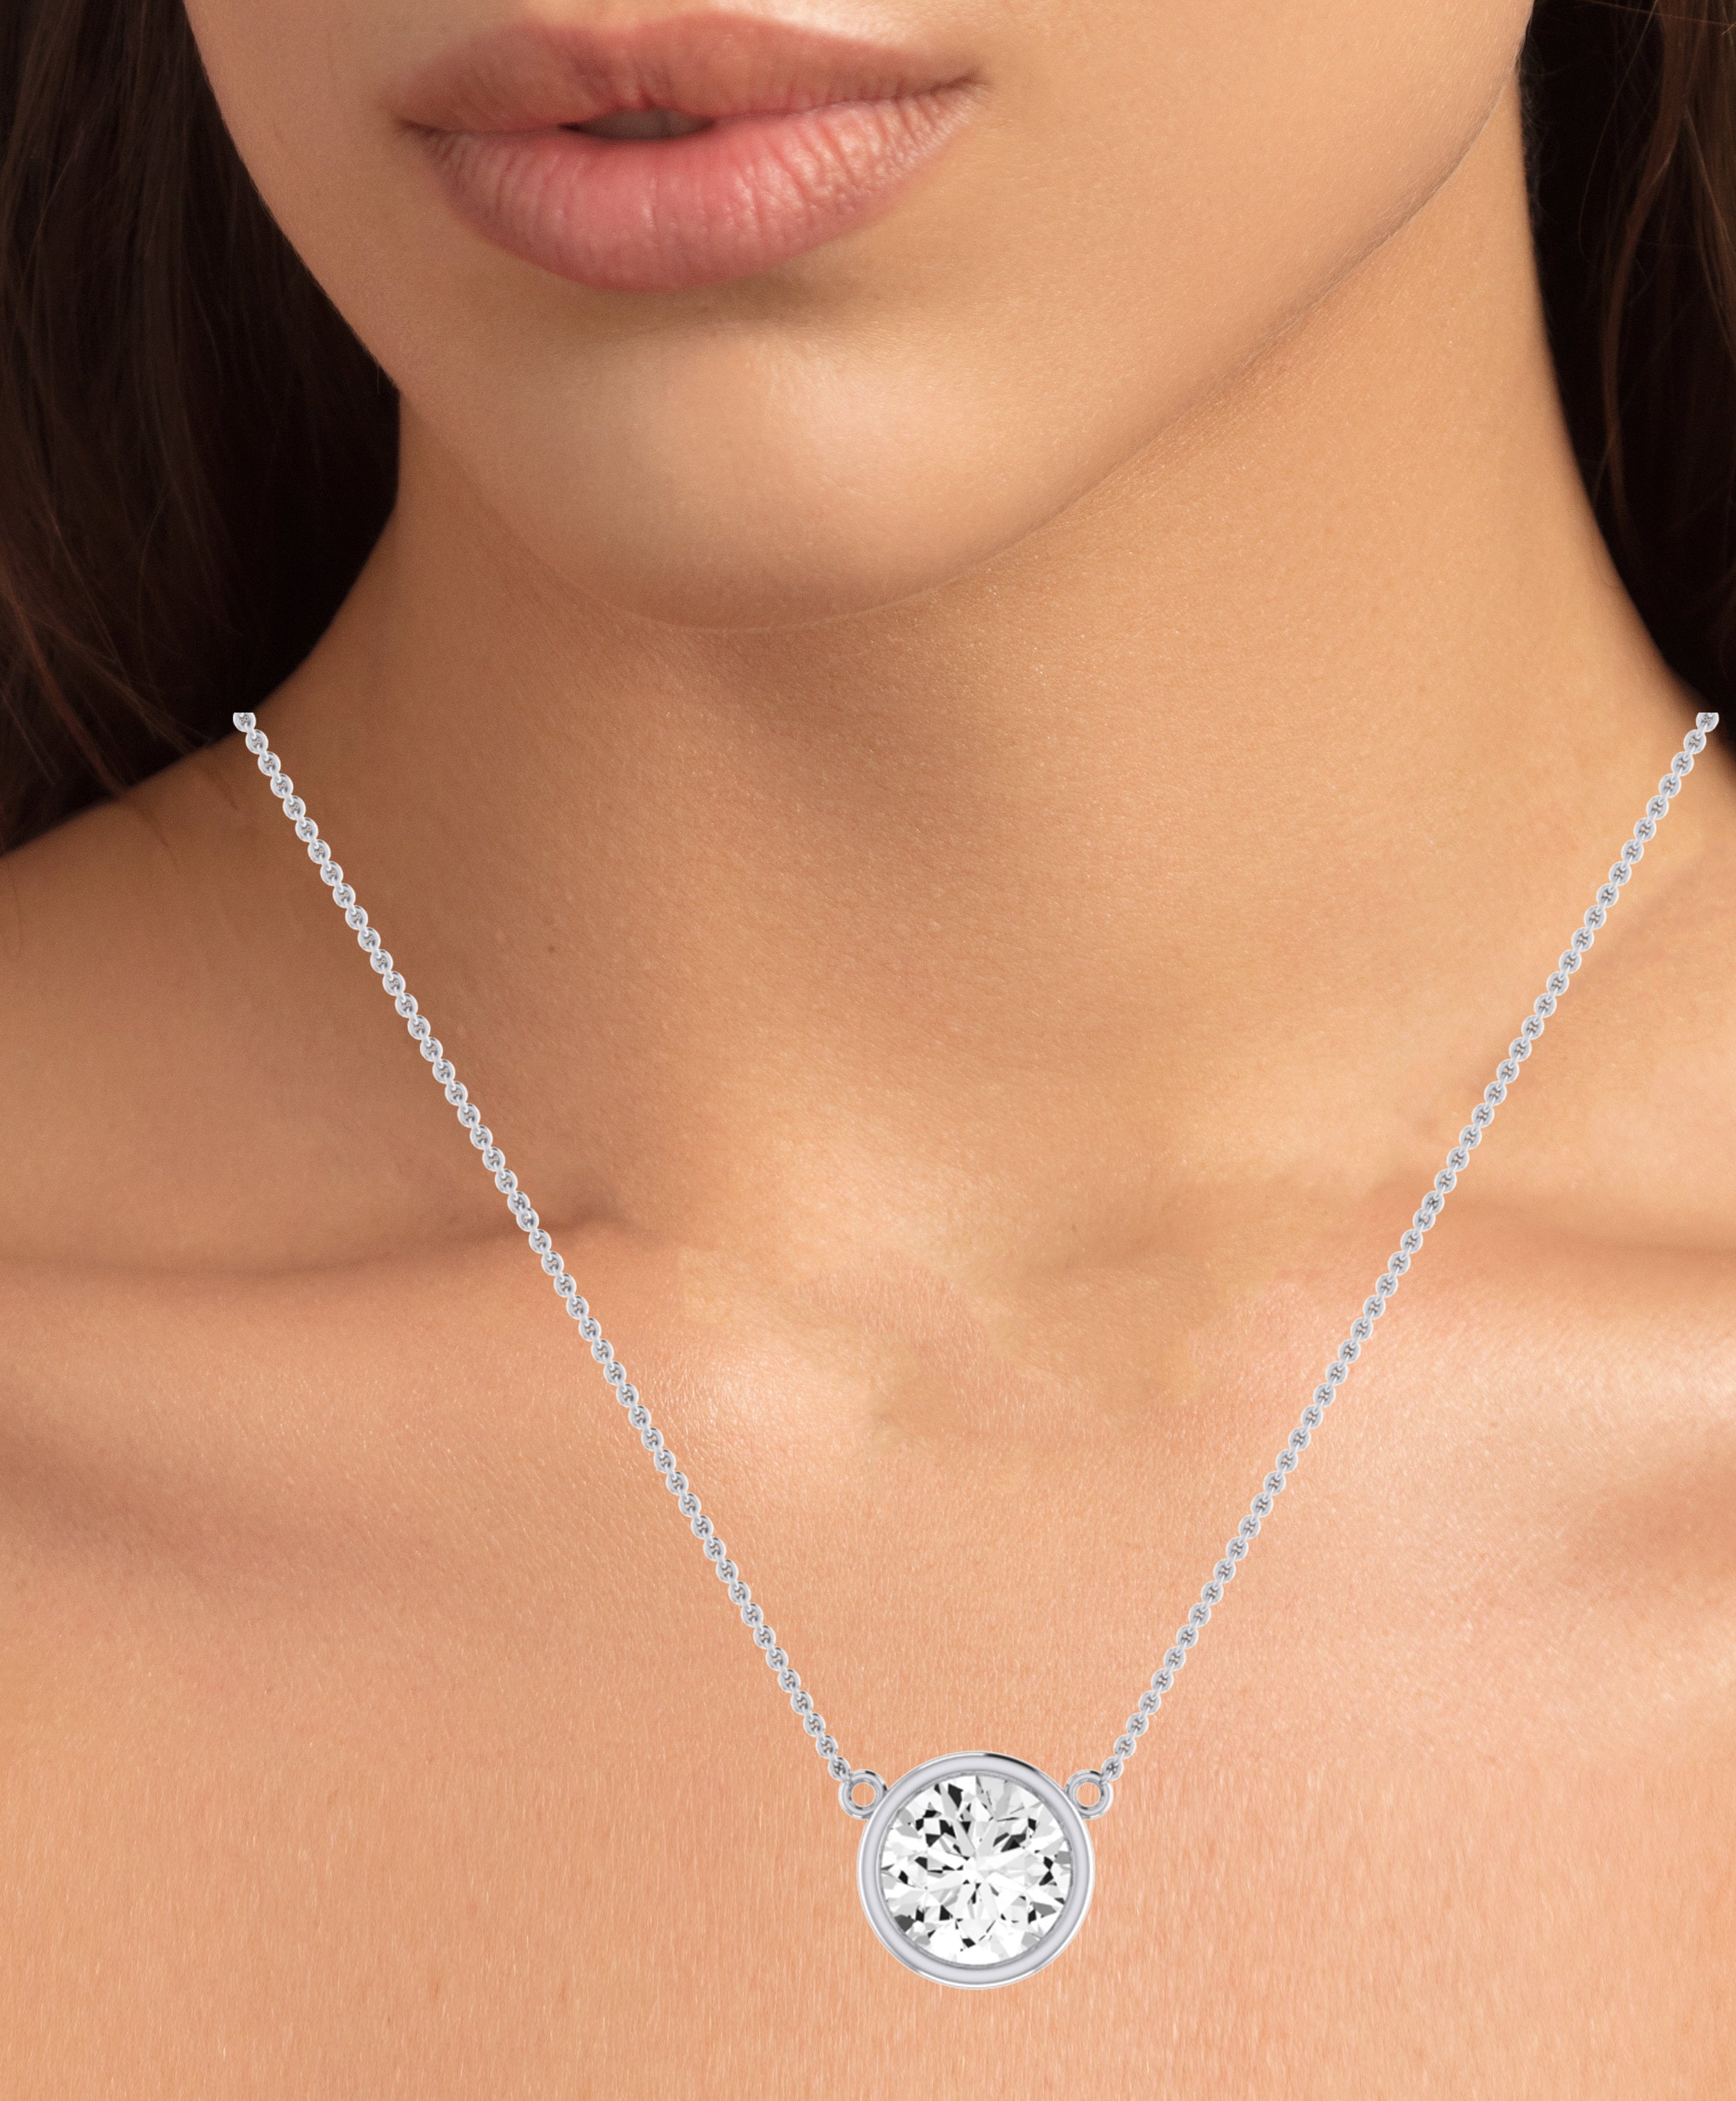 Vernal Bezel Set Diamond Solitaire Necklace (Clarity Enhanced) whitegold